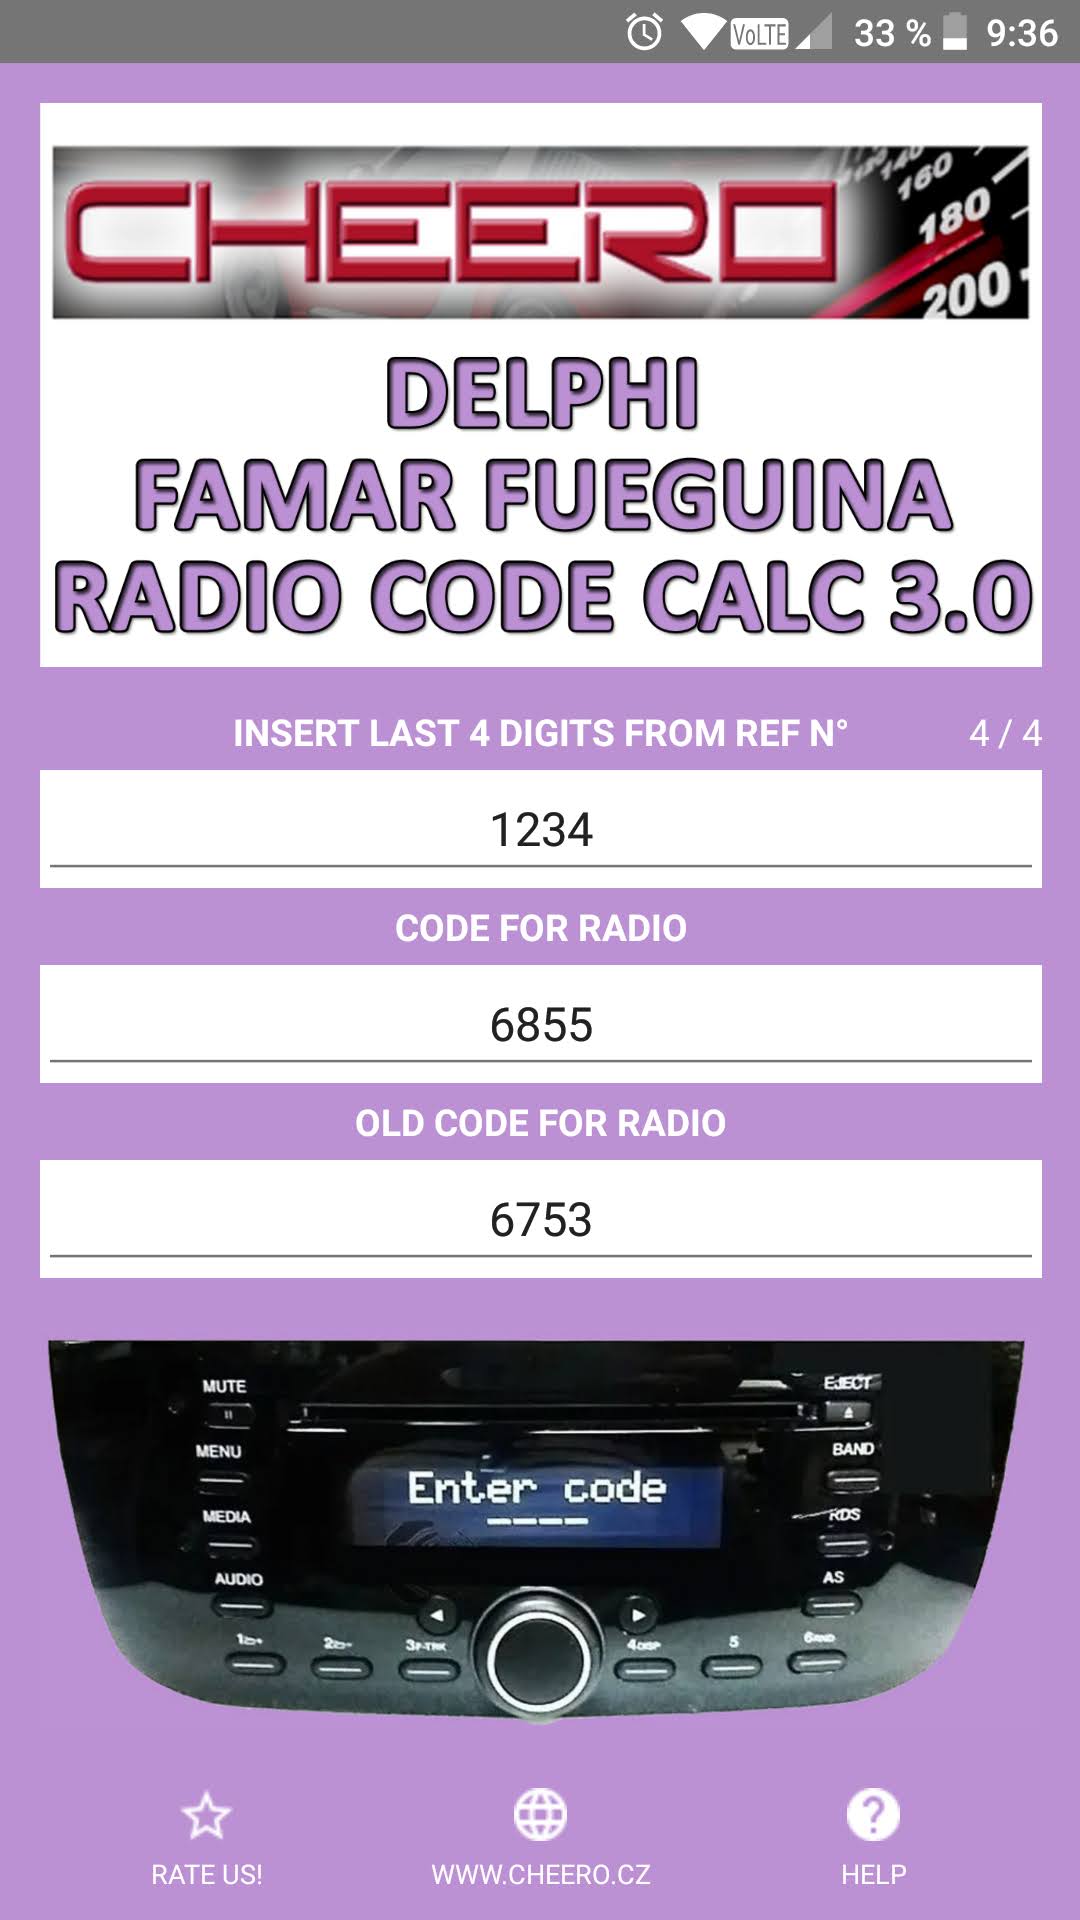 DELPHI FAMAR FUEGUINA RADIO CODE CALC